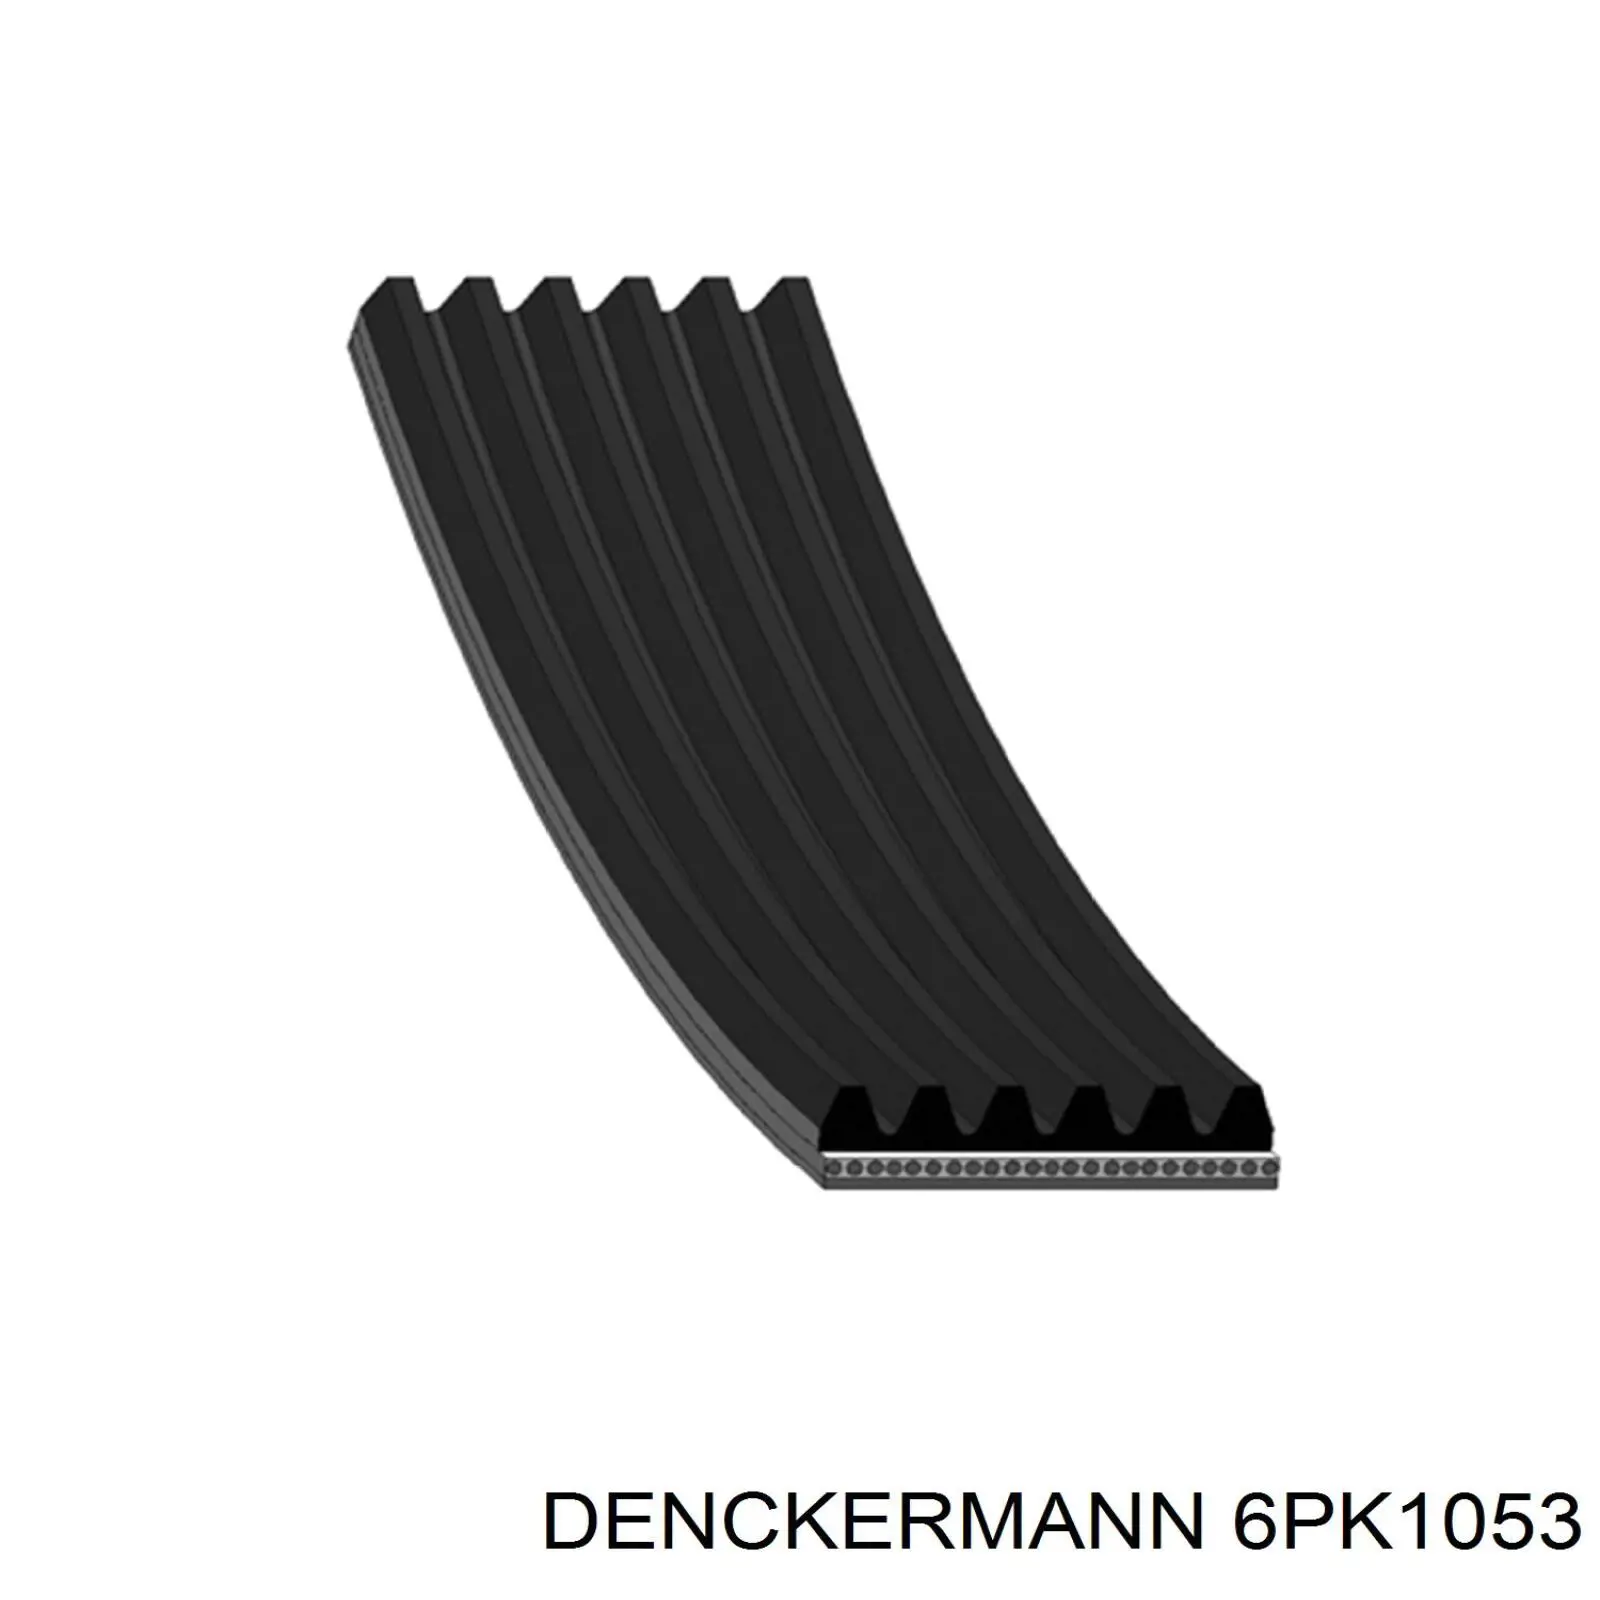 6PK1053 Denckermann correa trapezoidal